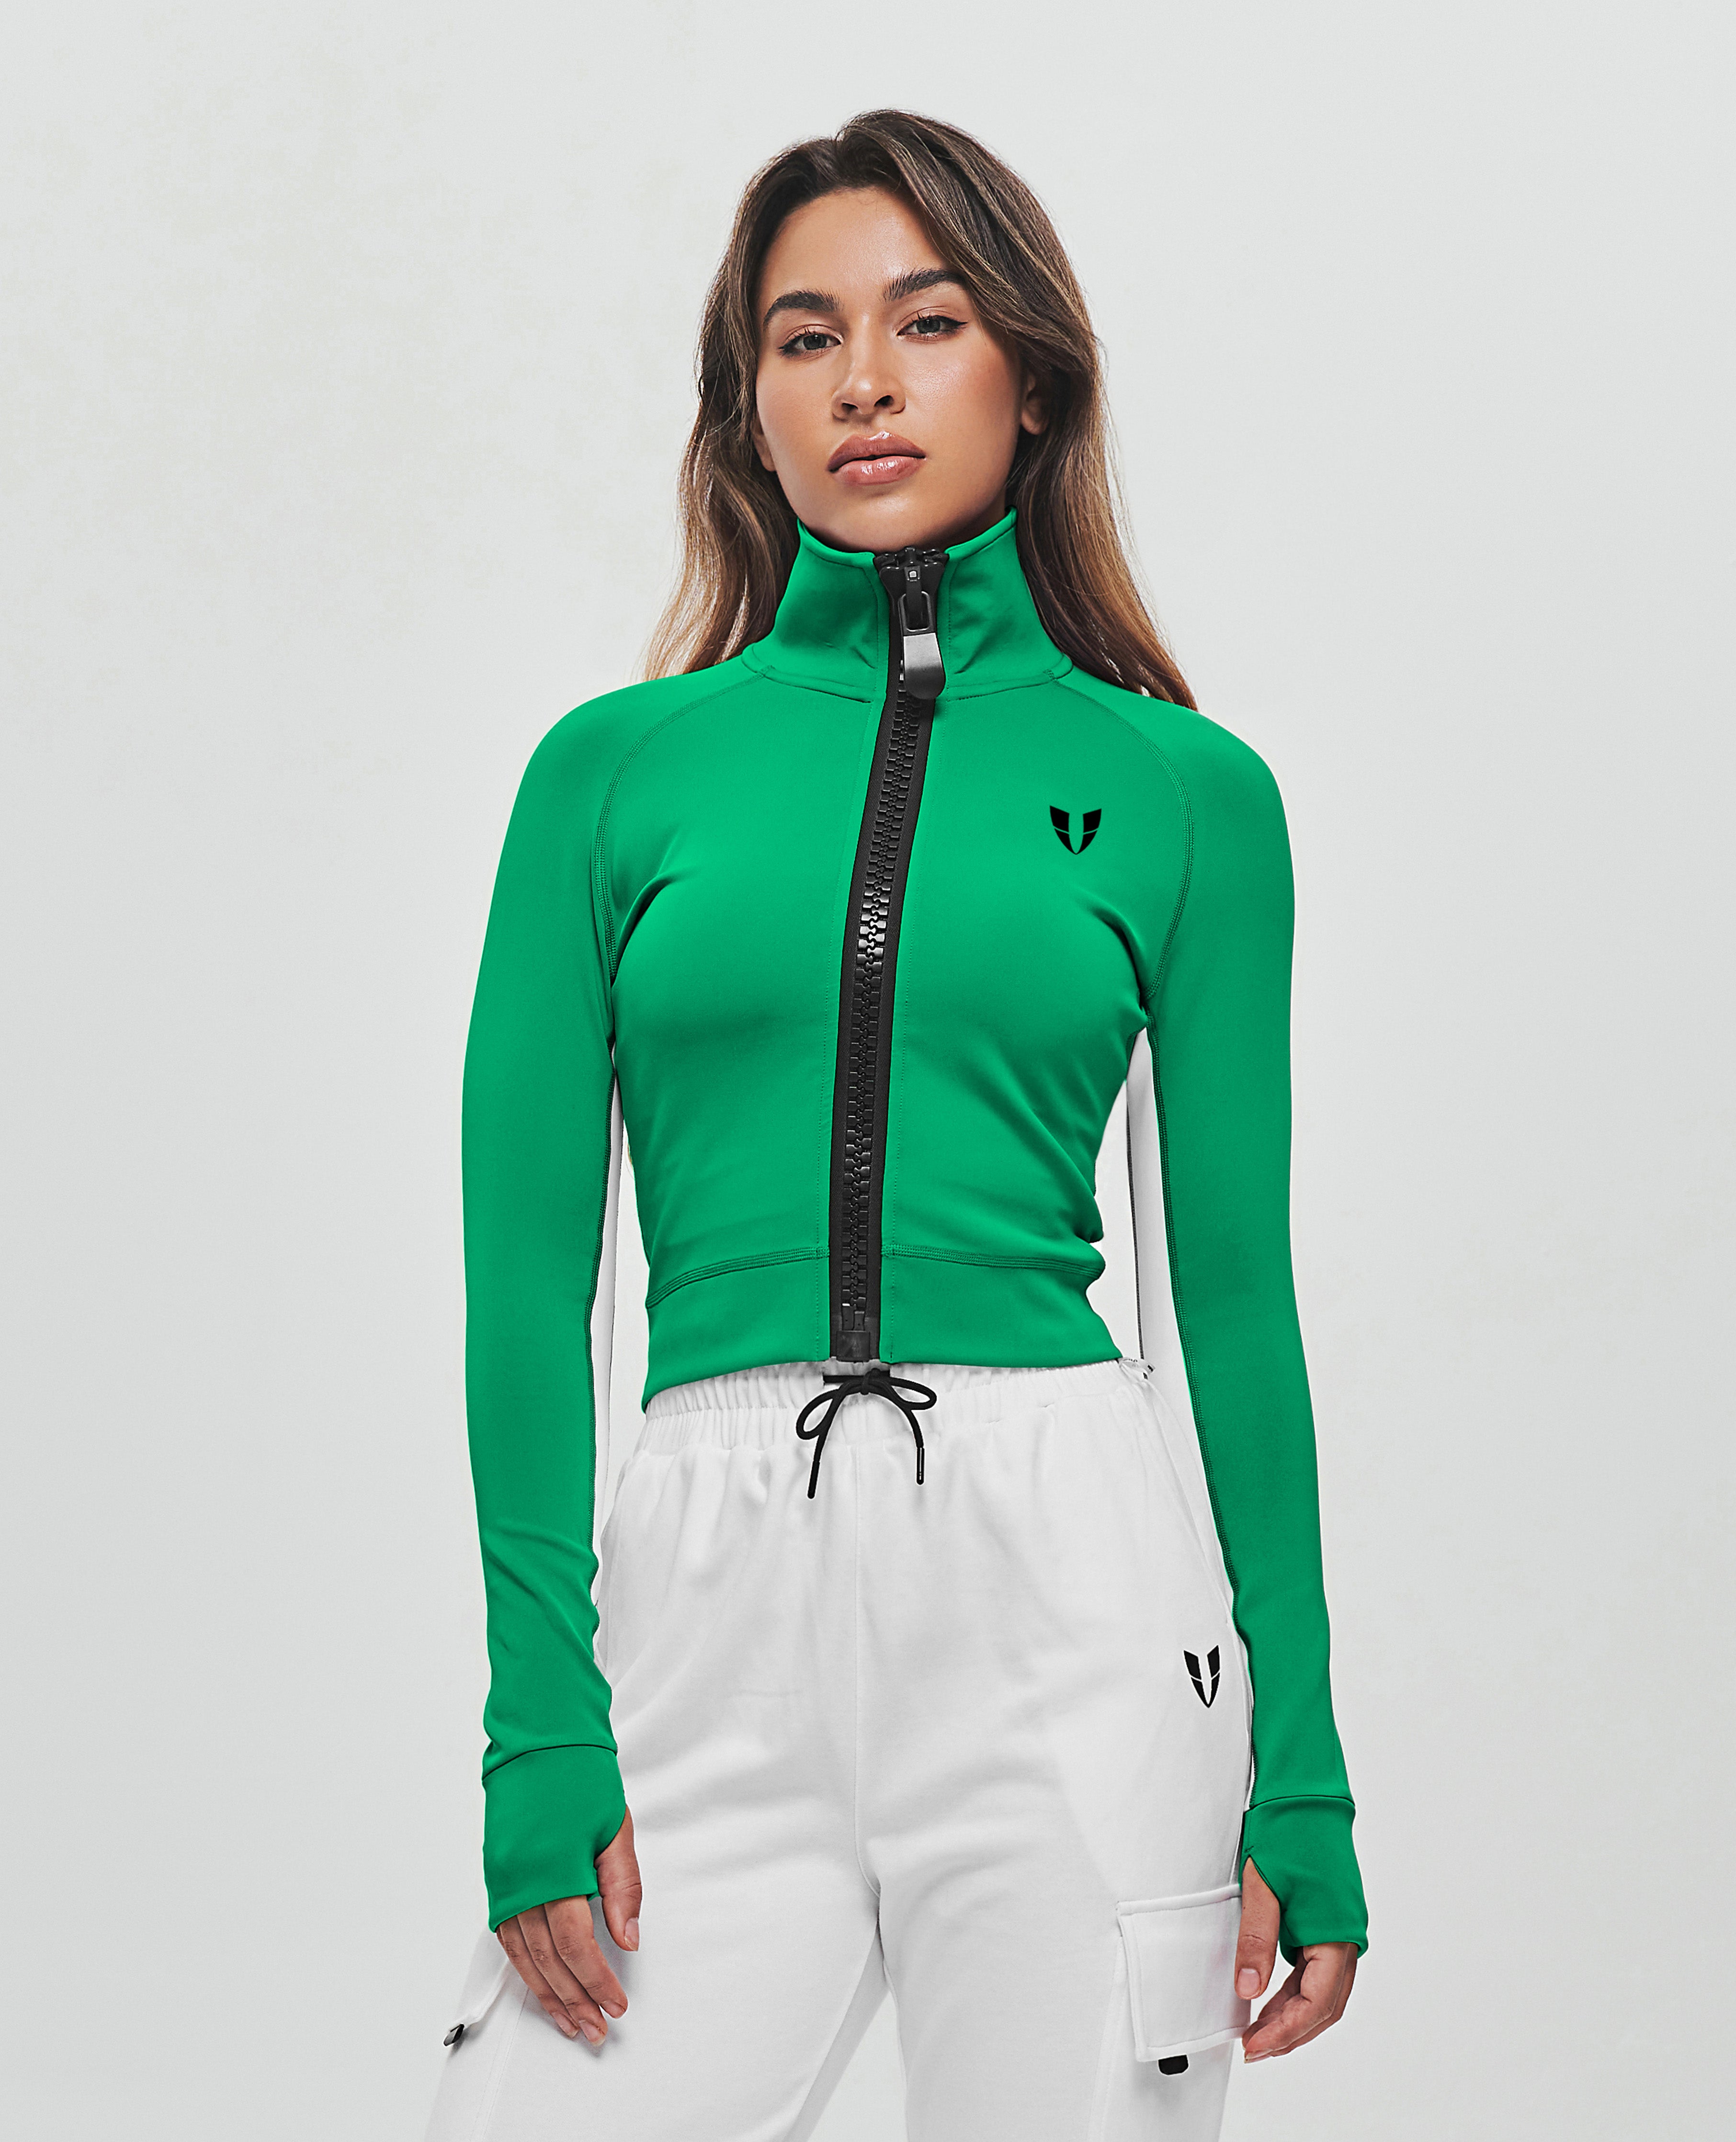 Kurze Jacke mit Reißverschluss – Grün